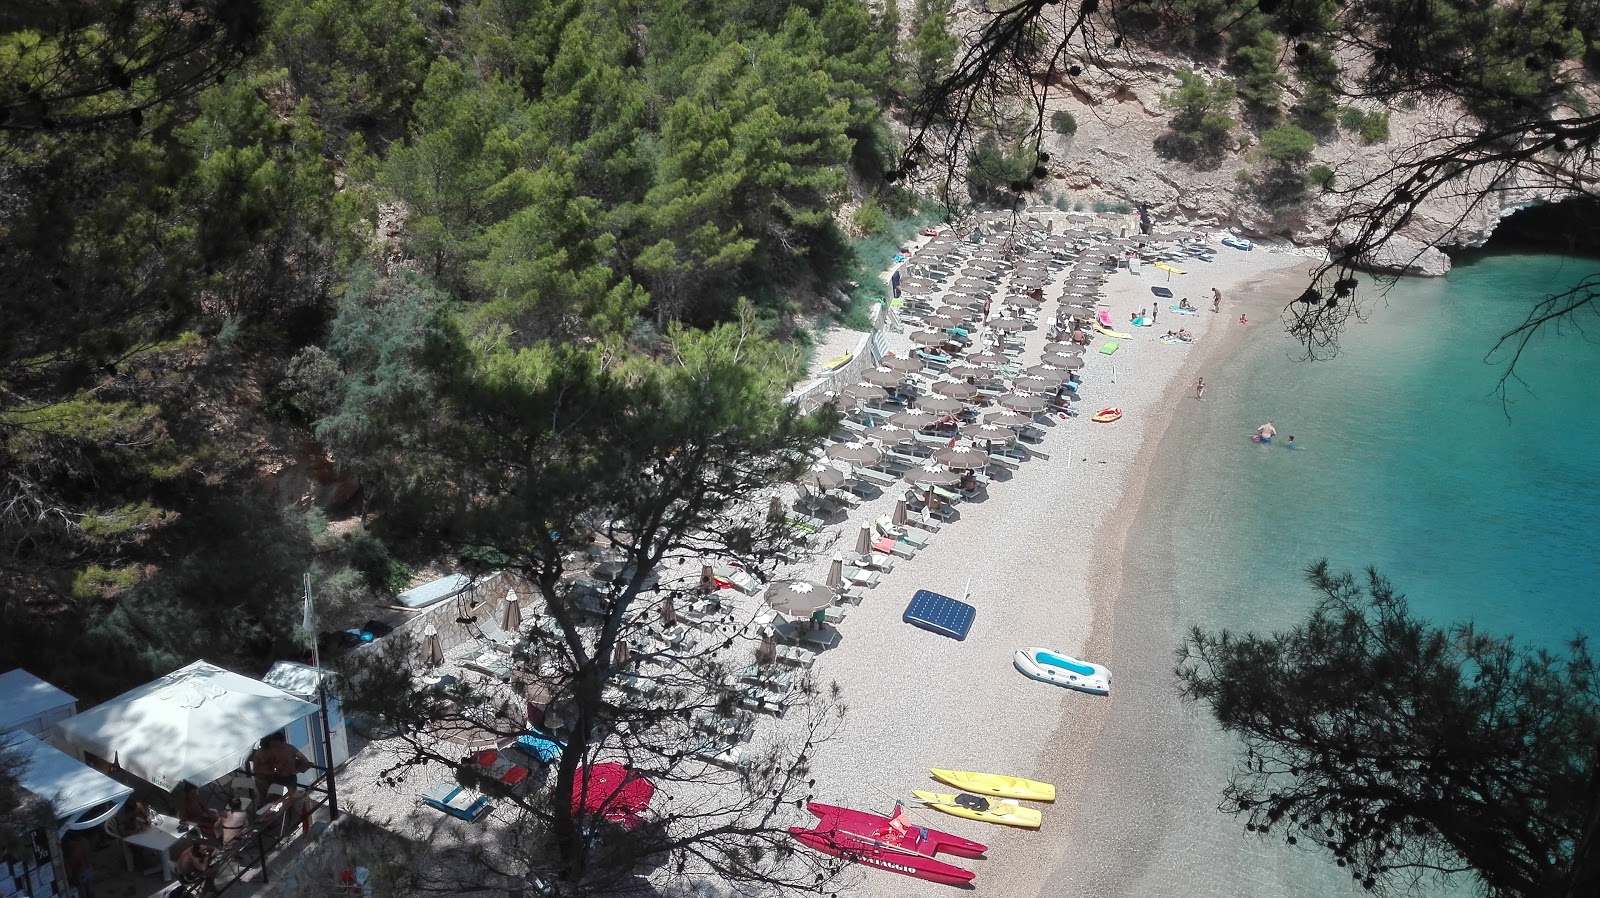 Spiaggia di Portopiatto'in fotoğrafı küçük koy ile birlikte